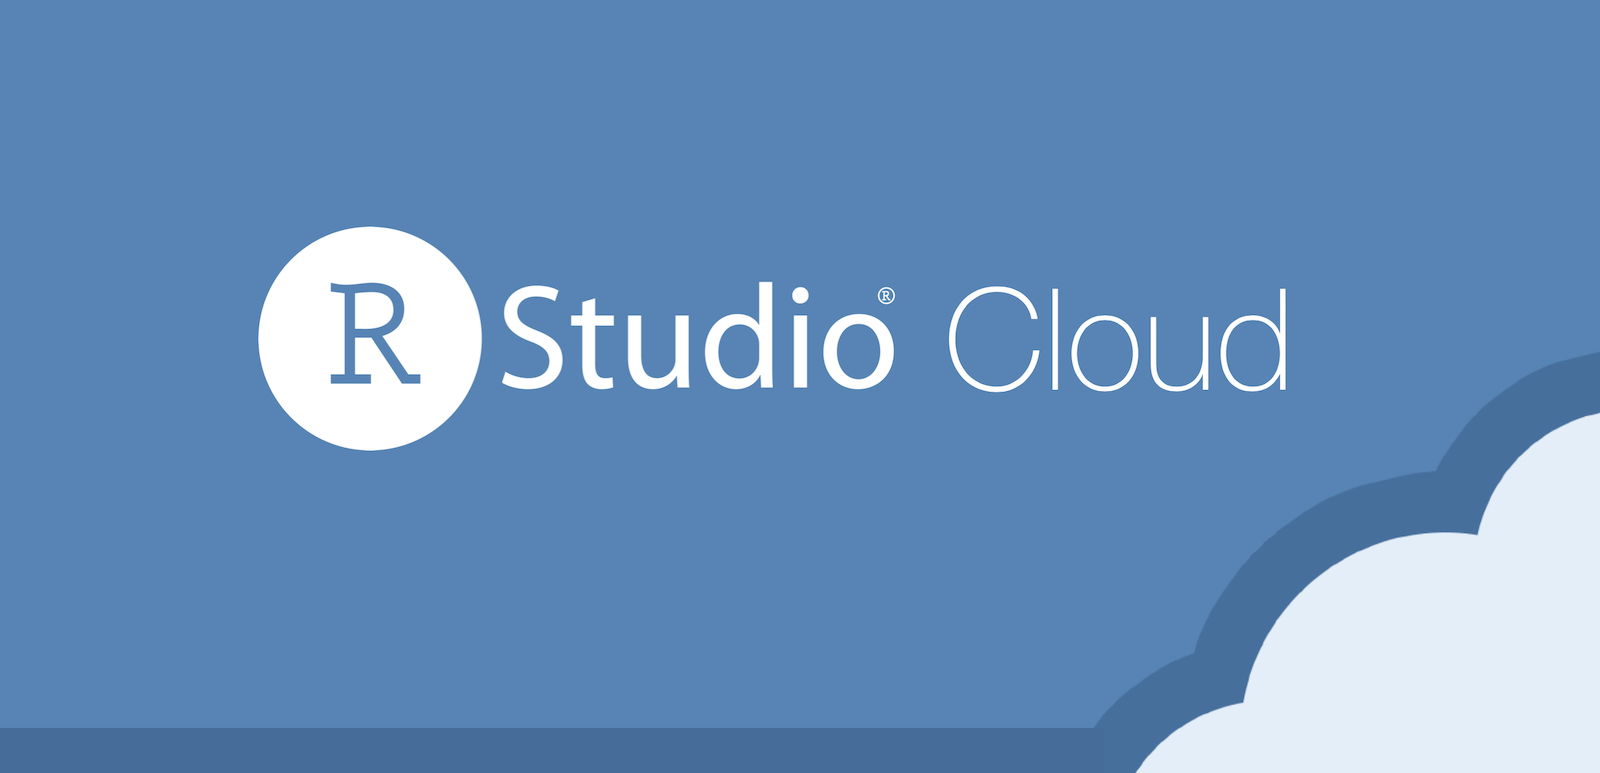 RStudio Cloud logo